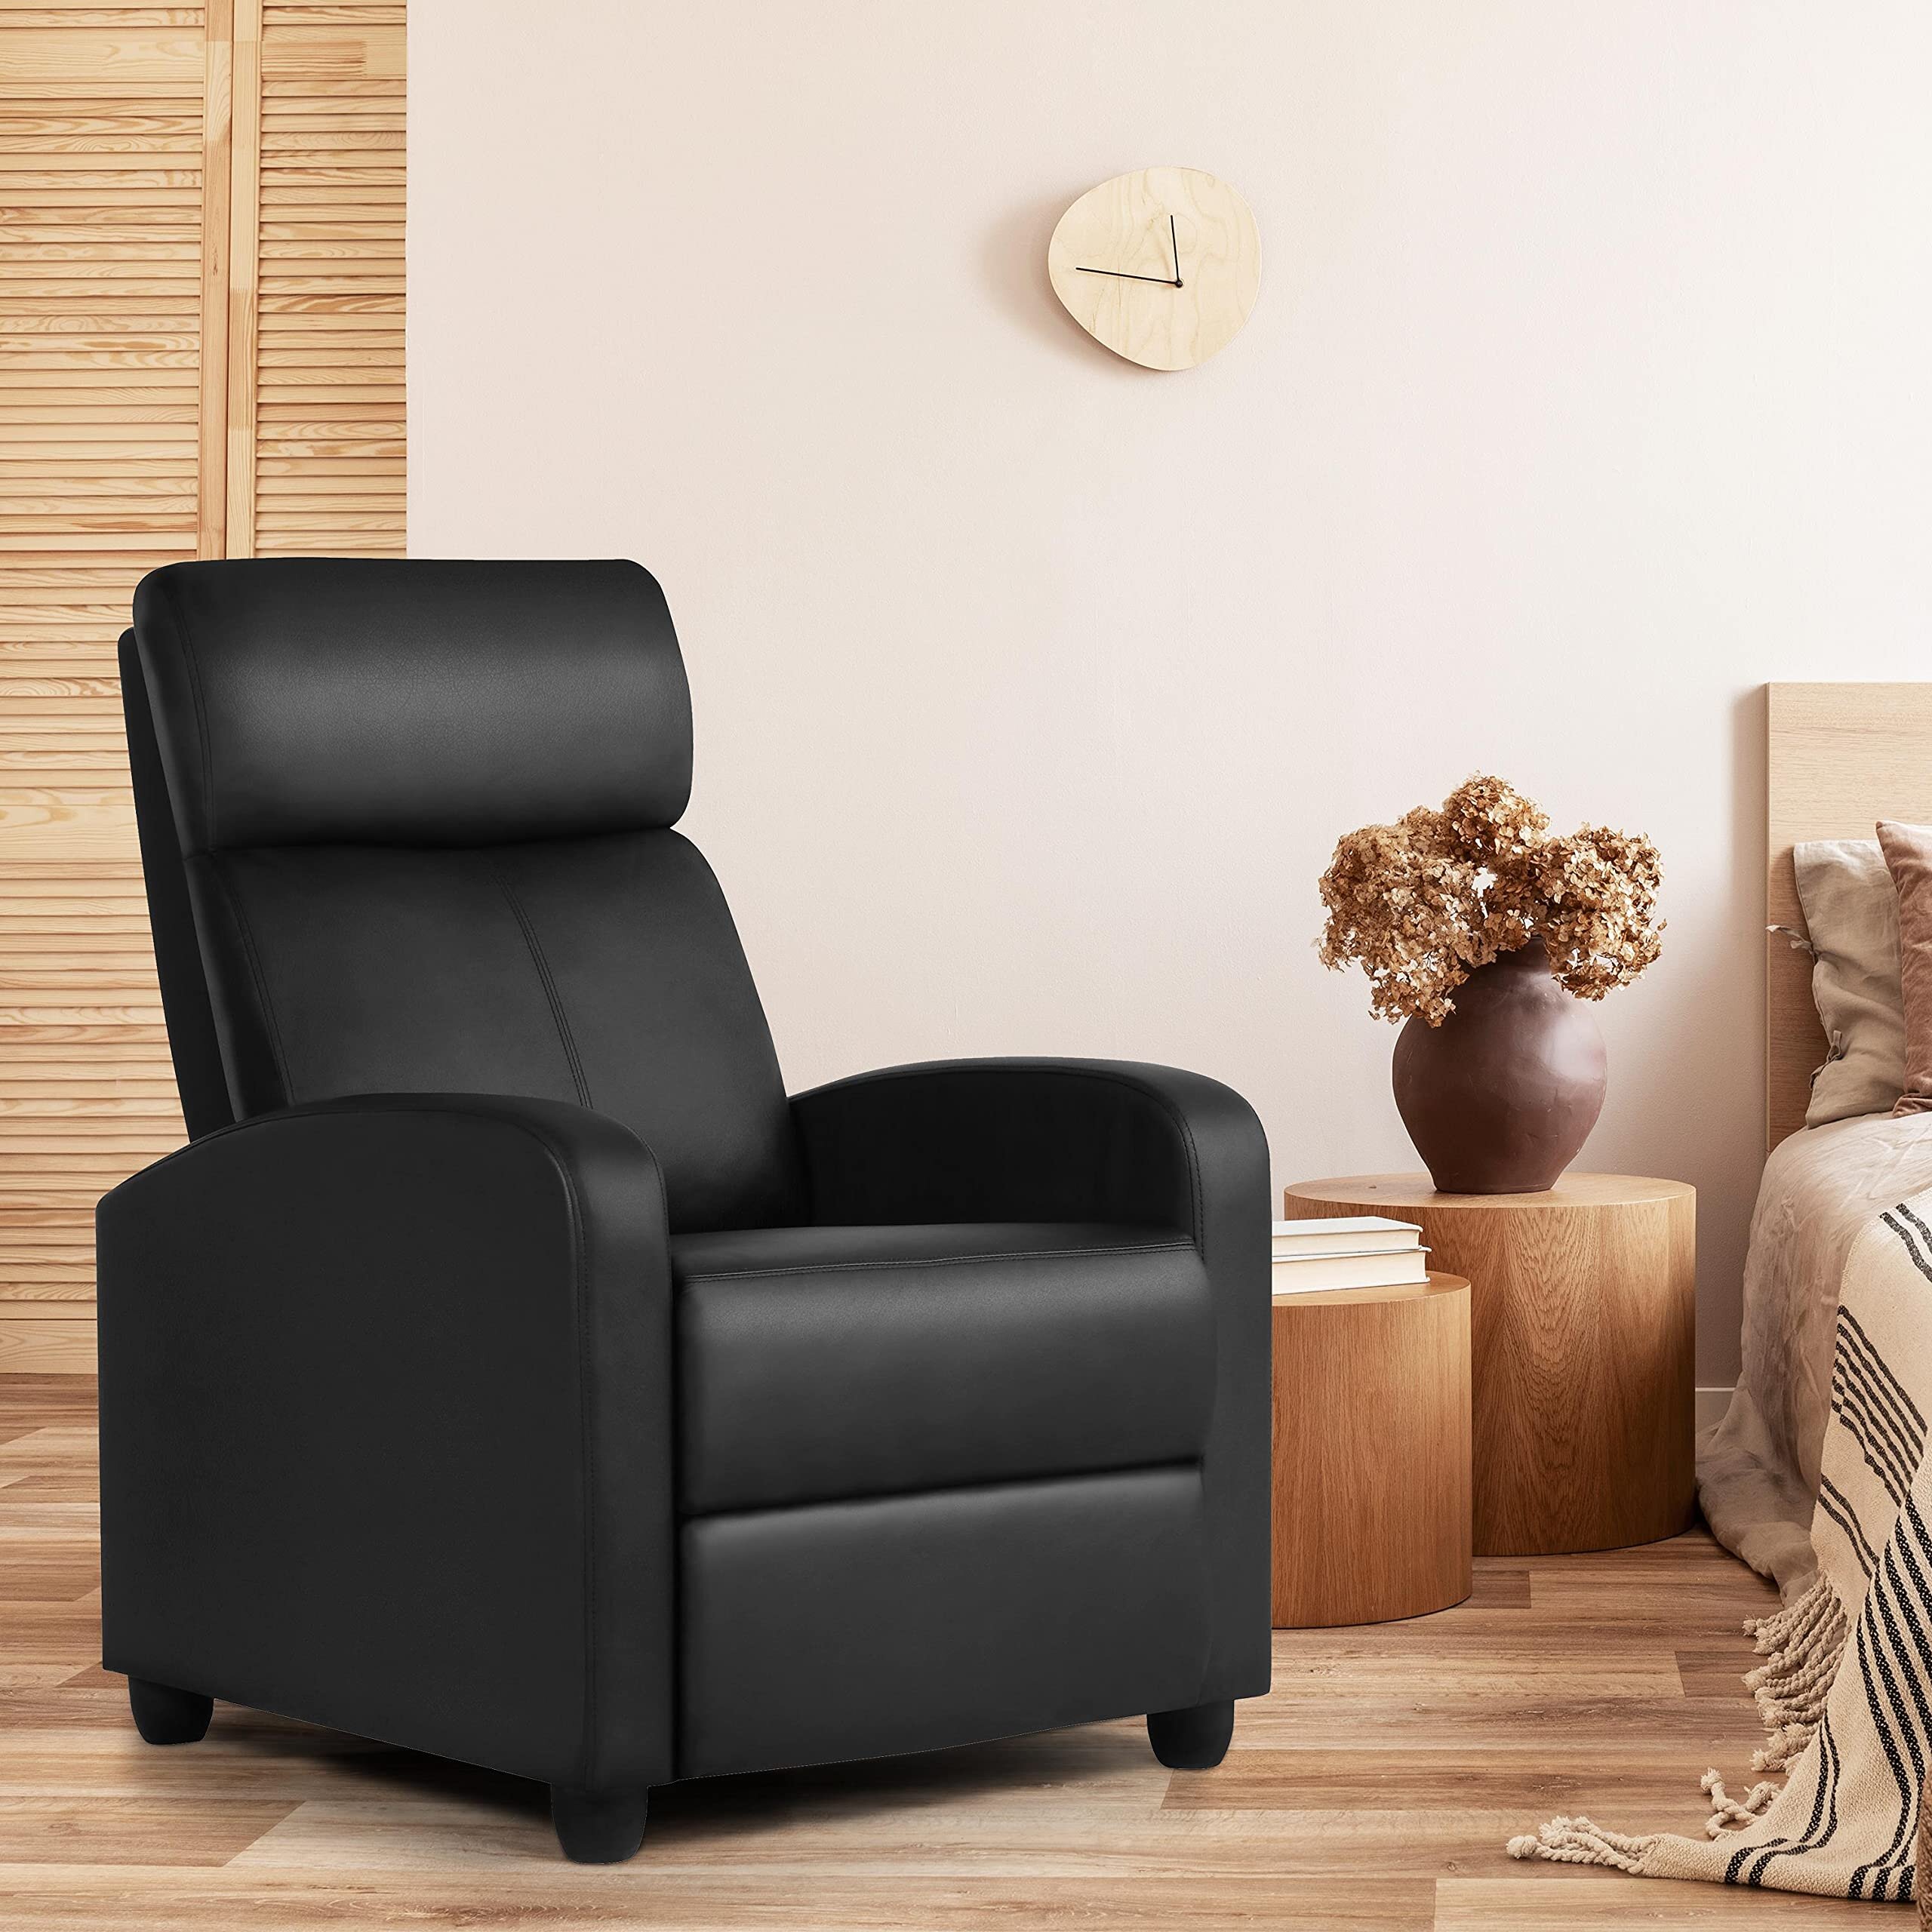 High Back Leather Recliner Sofa Rocker Home Theater Seat Headrest Lumbar Chair 